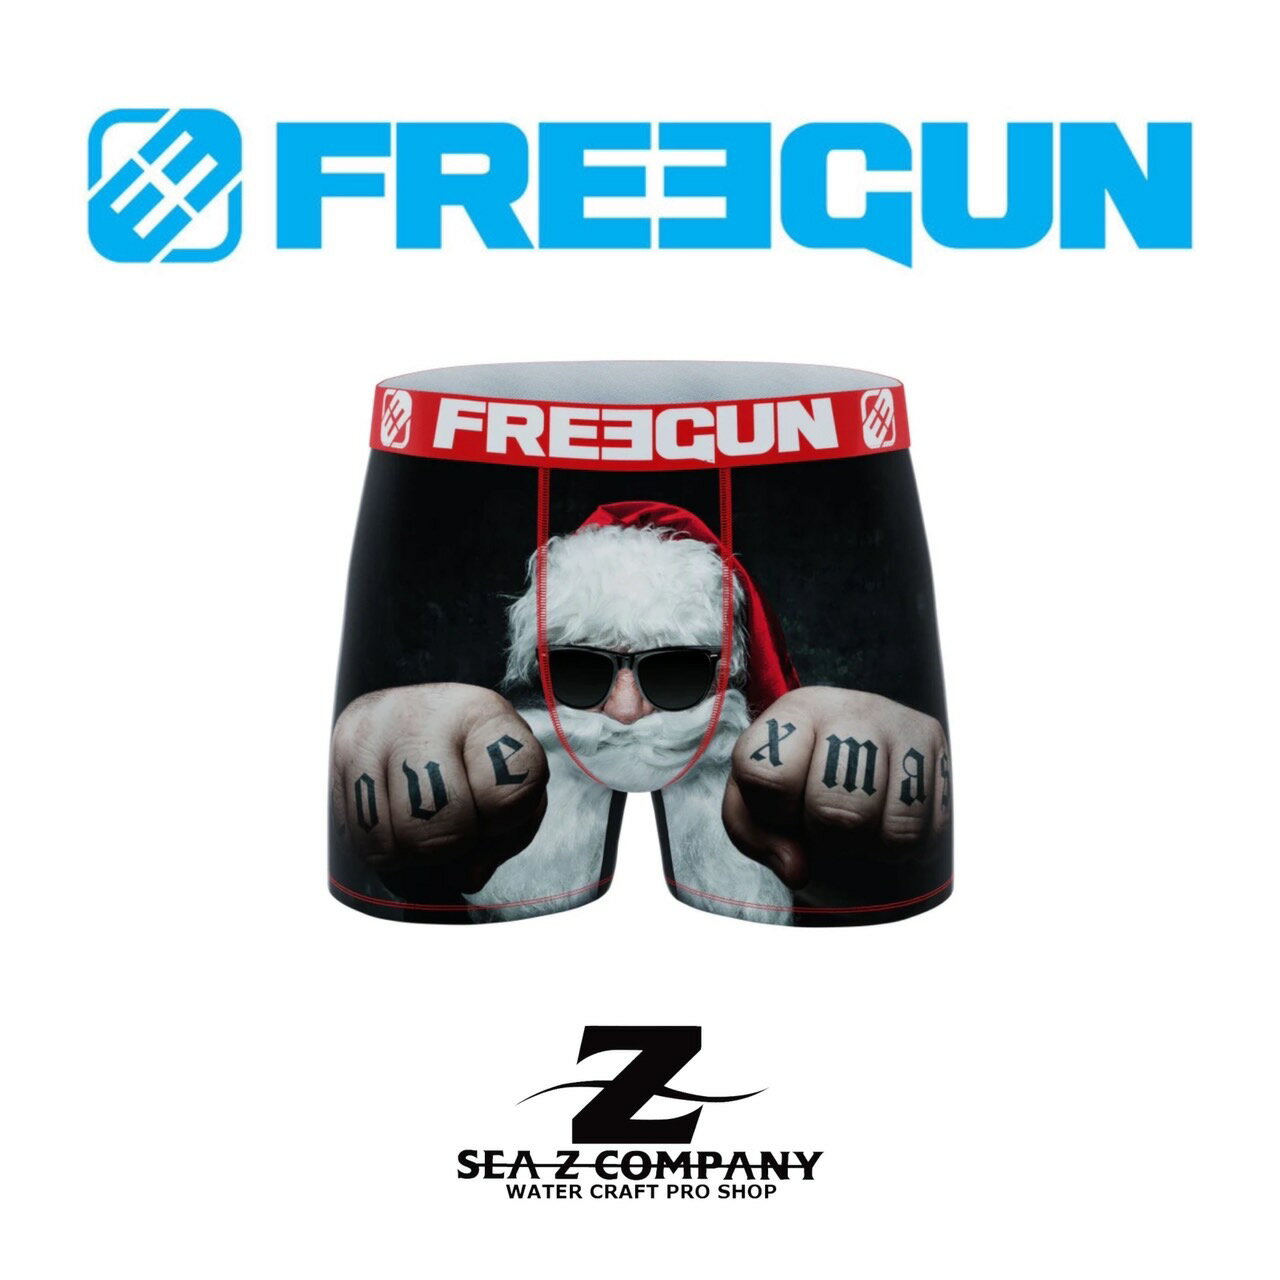 【FREEGUN】フリーガン BOXER PANTS SNOW SERIES FRG23SN S・M・L・XL アンダーパンツ ボクサーパンツ